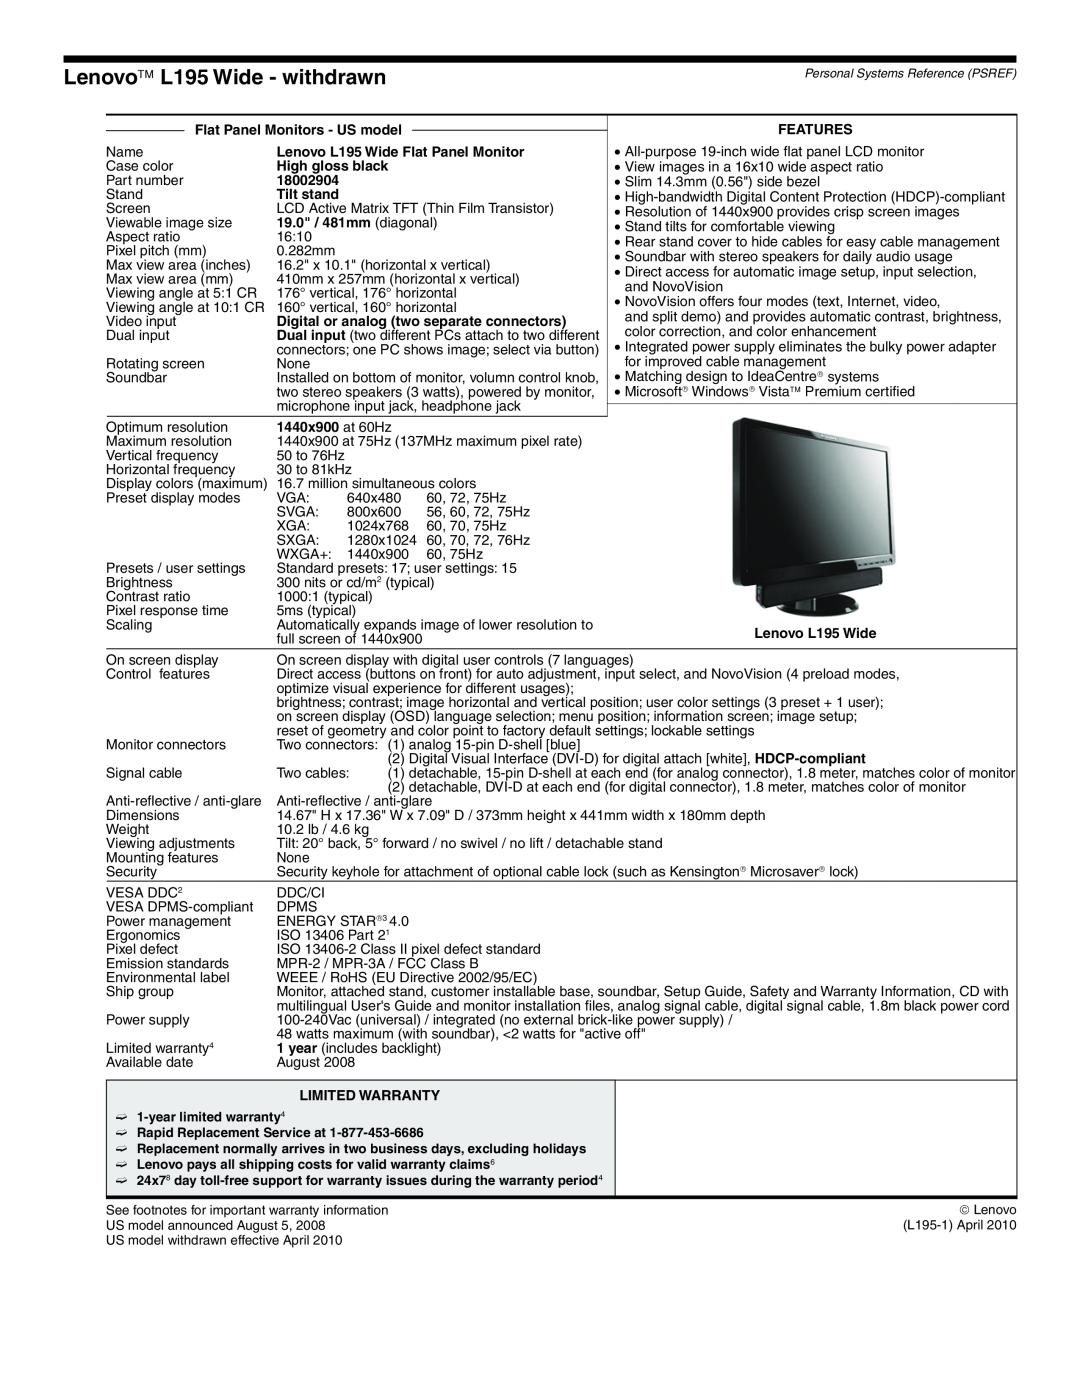 Lenovo L2363D manual Lenovo L195 Wide - withdrawn 